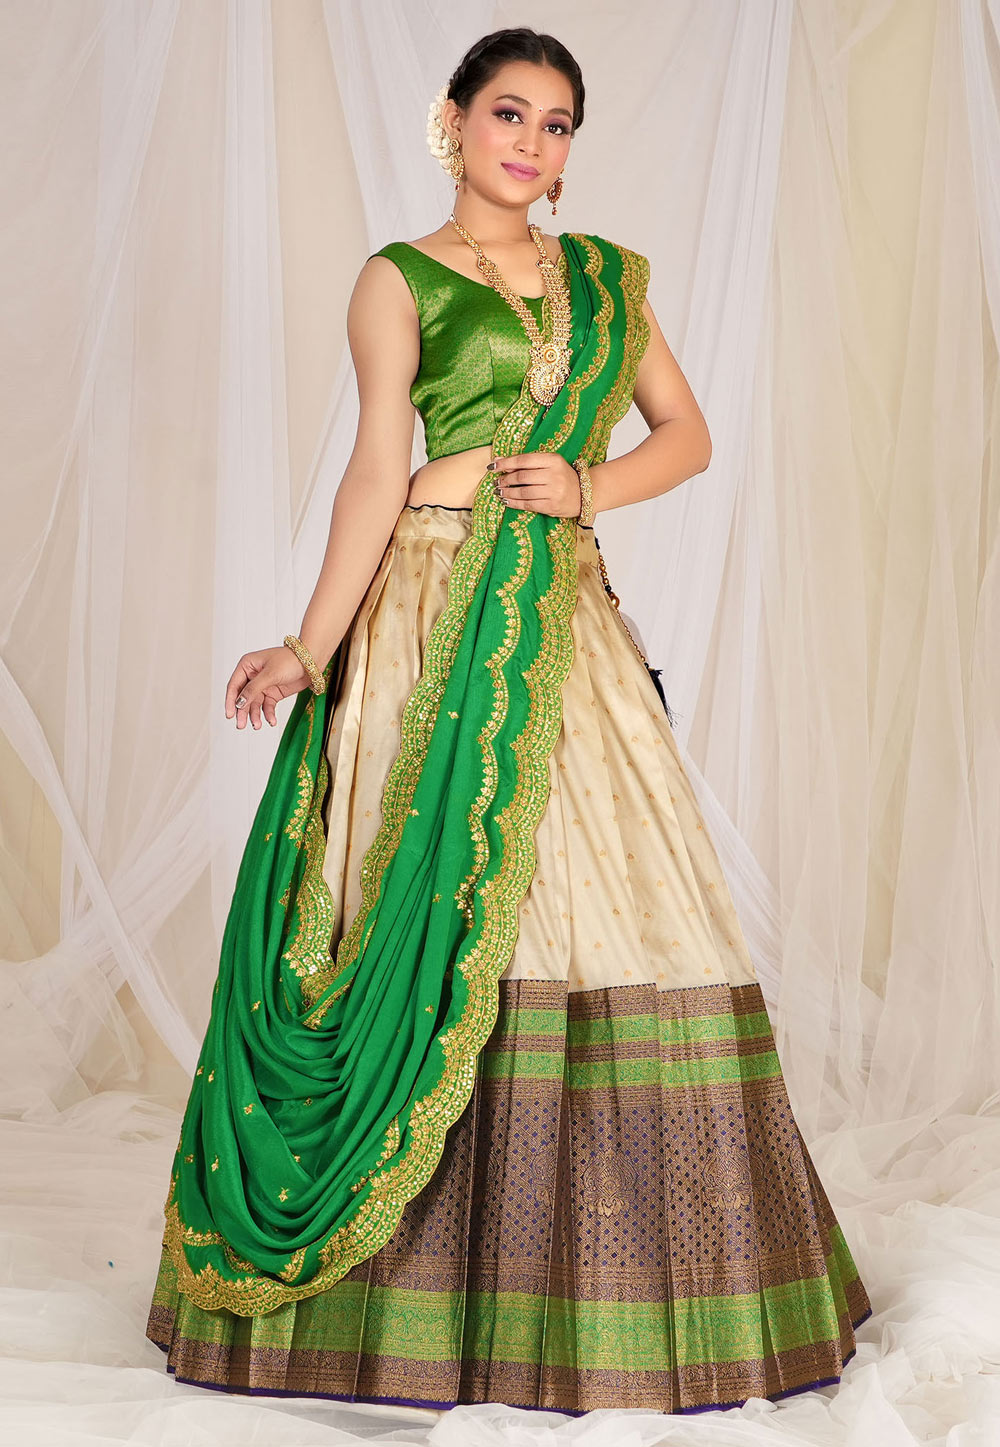 Emrald Cream & Green Colored Net Heavy Embroidered Lehenga Choli – Lady  India